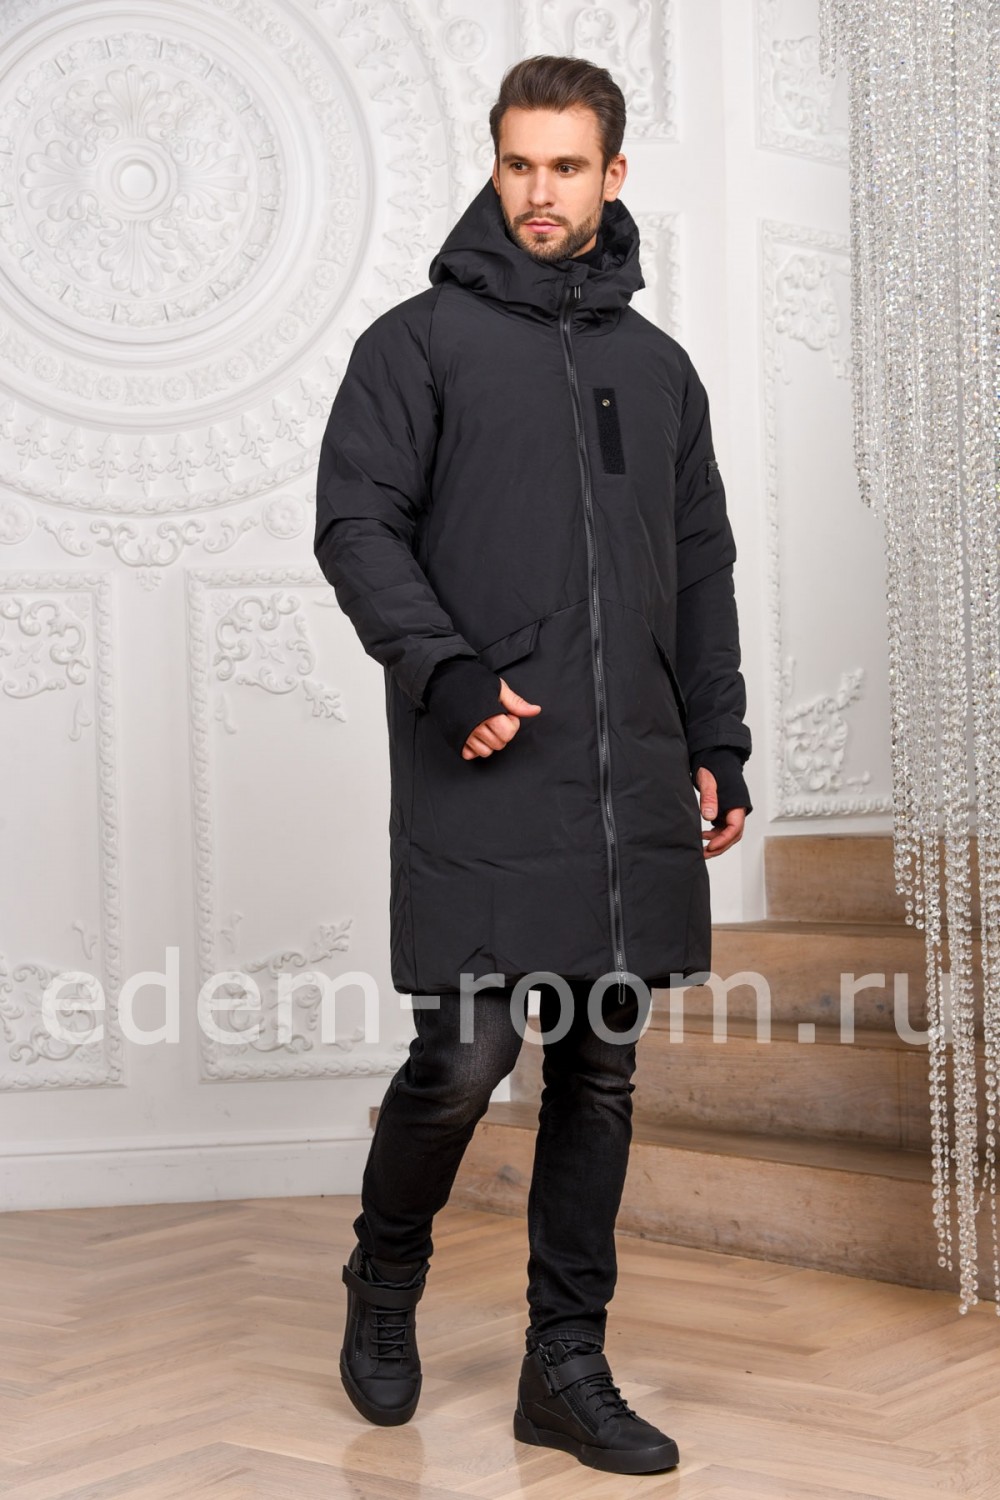 Мужской пуховик - пальто Boris Bidjan Saberi